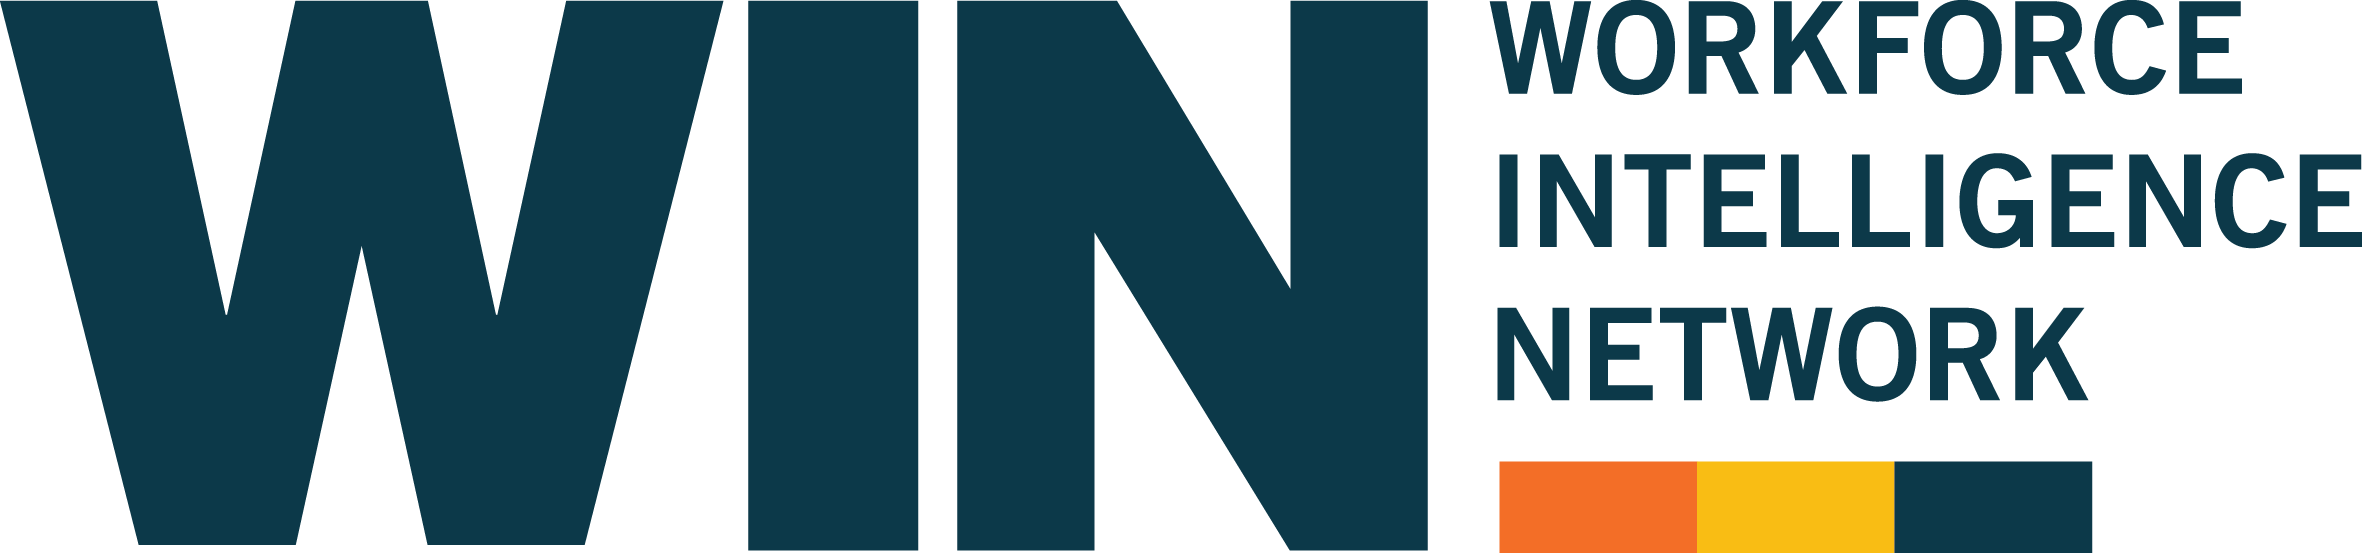 Workforce Intelligence Network Logo